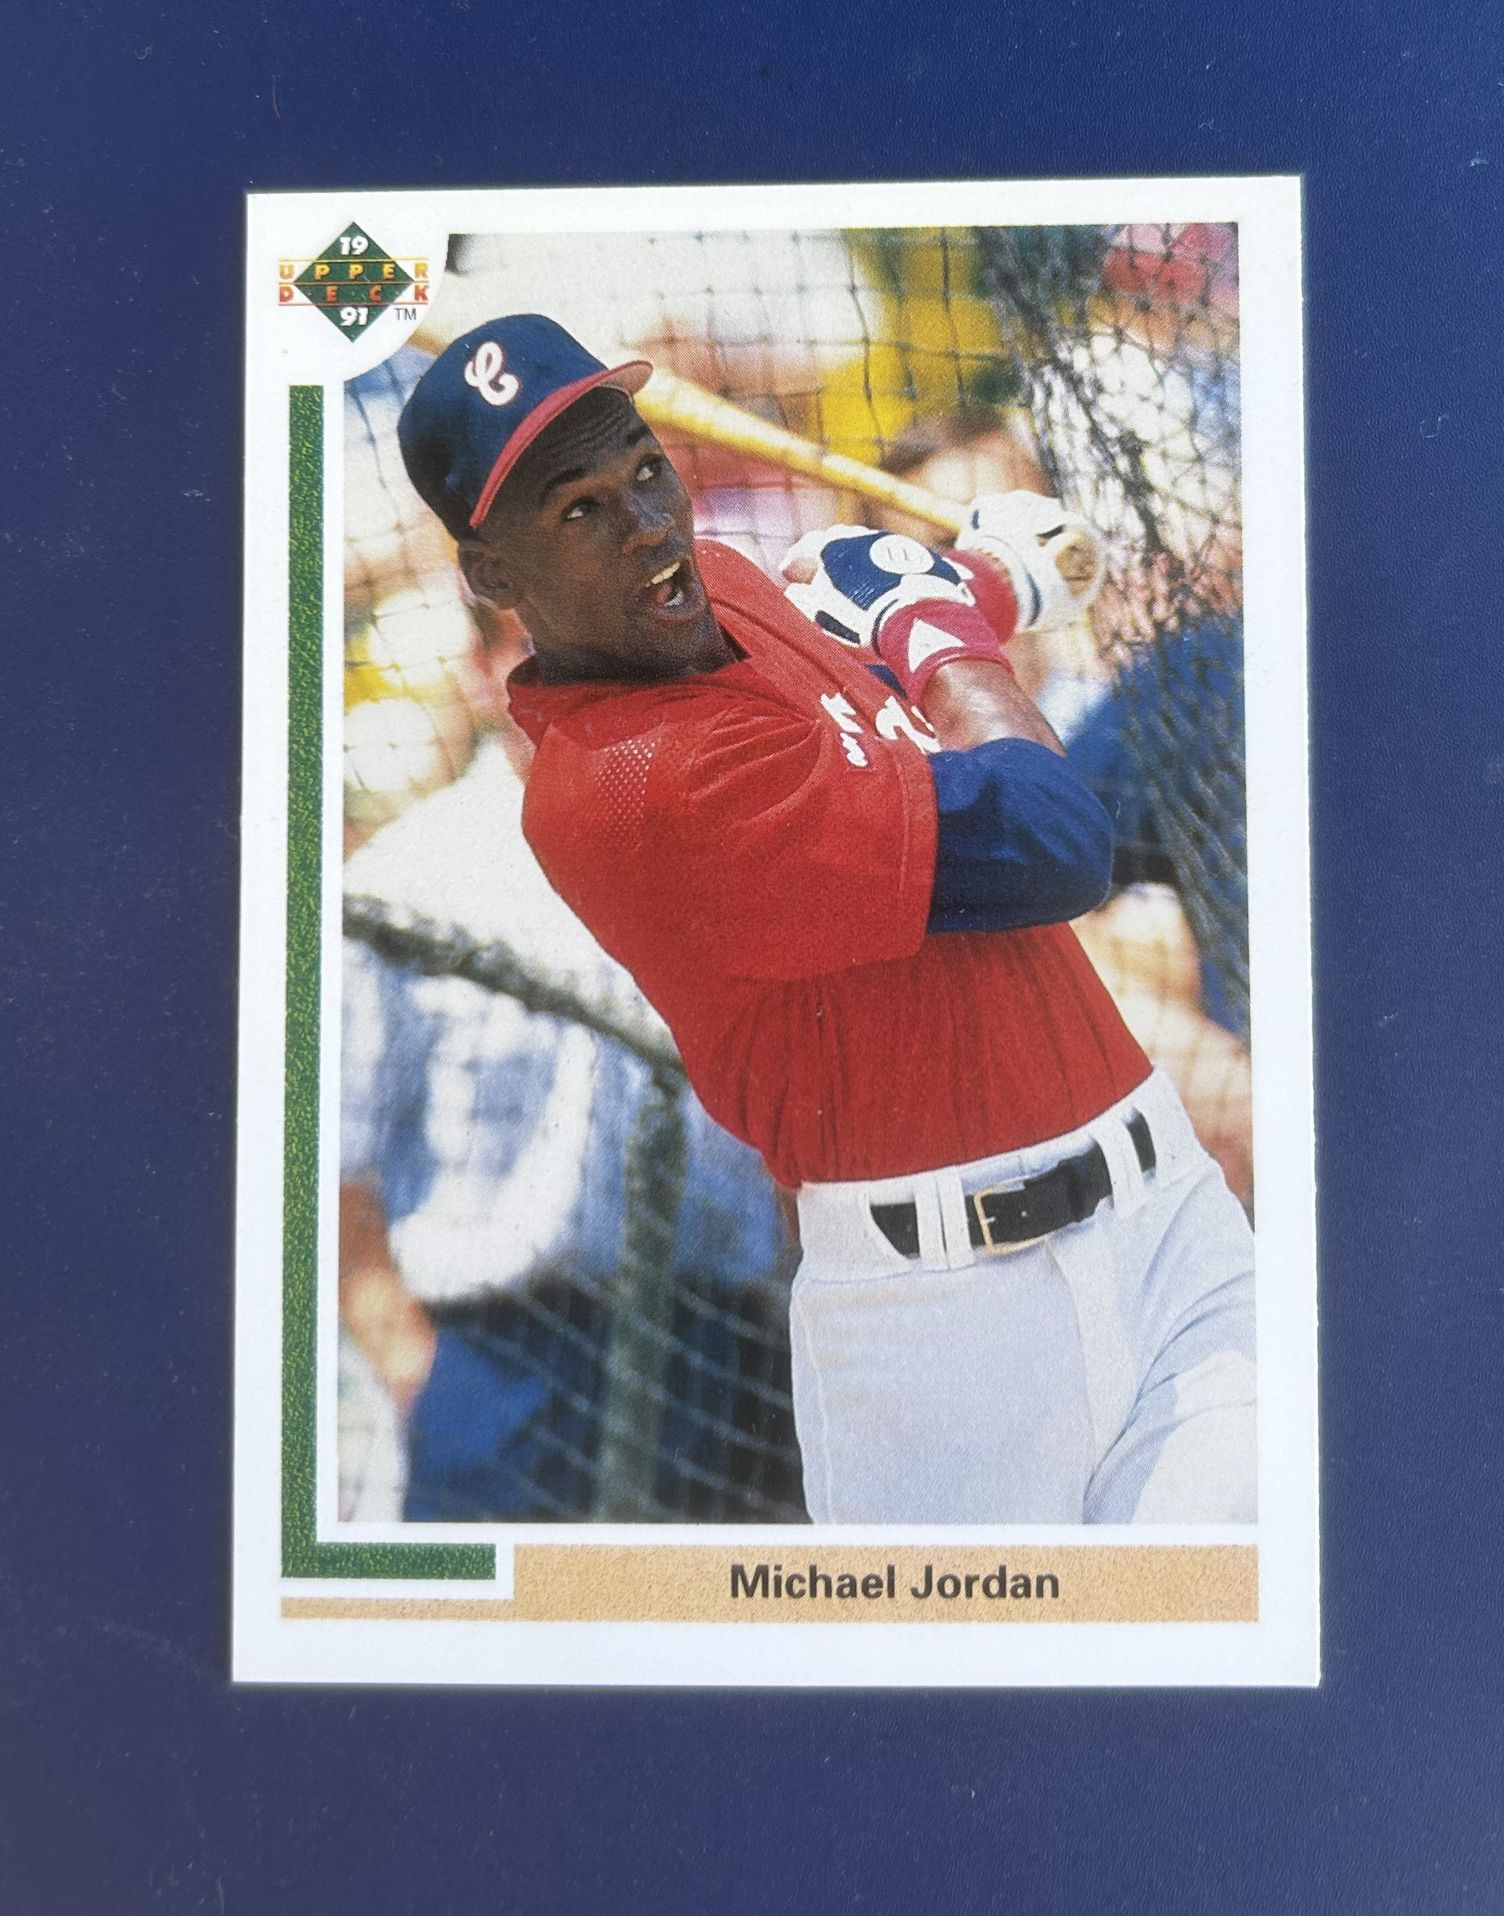 1991 Upper Deck SP1 Michael Jordan Baseball Card 